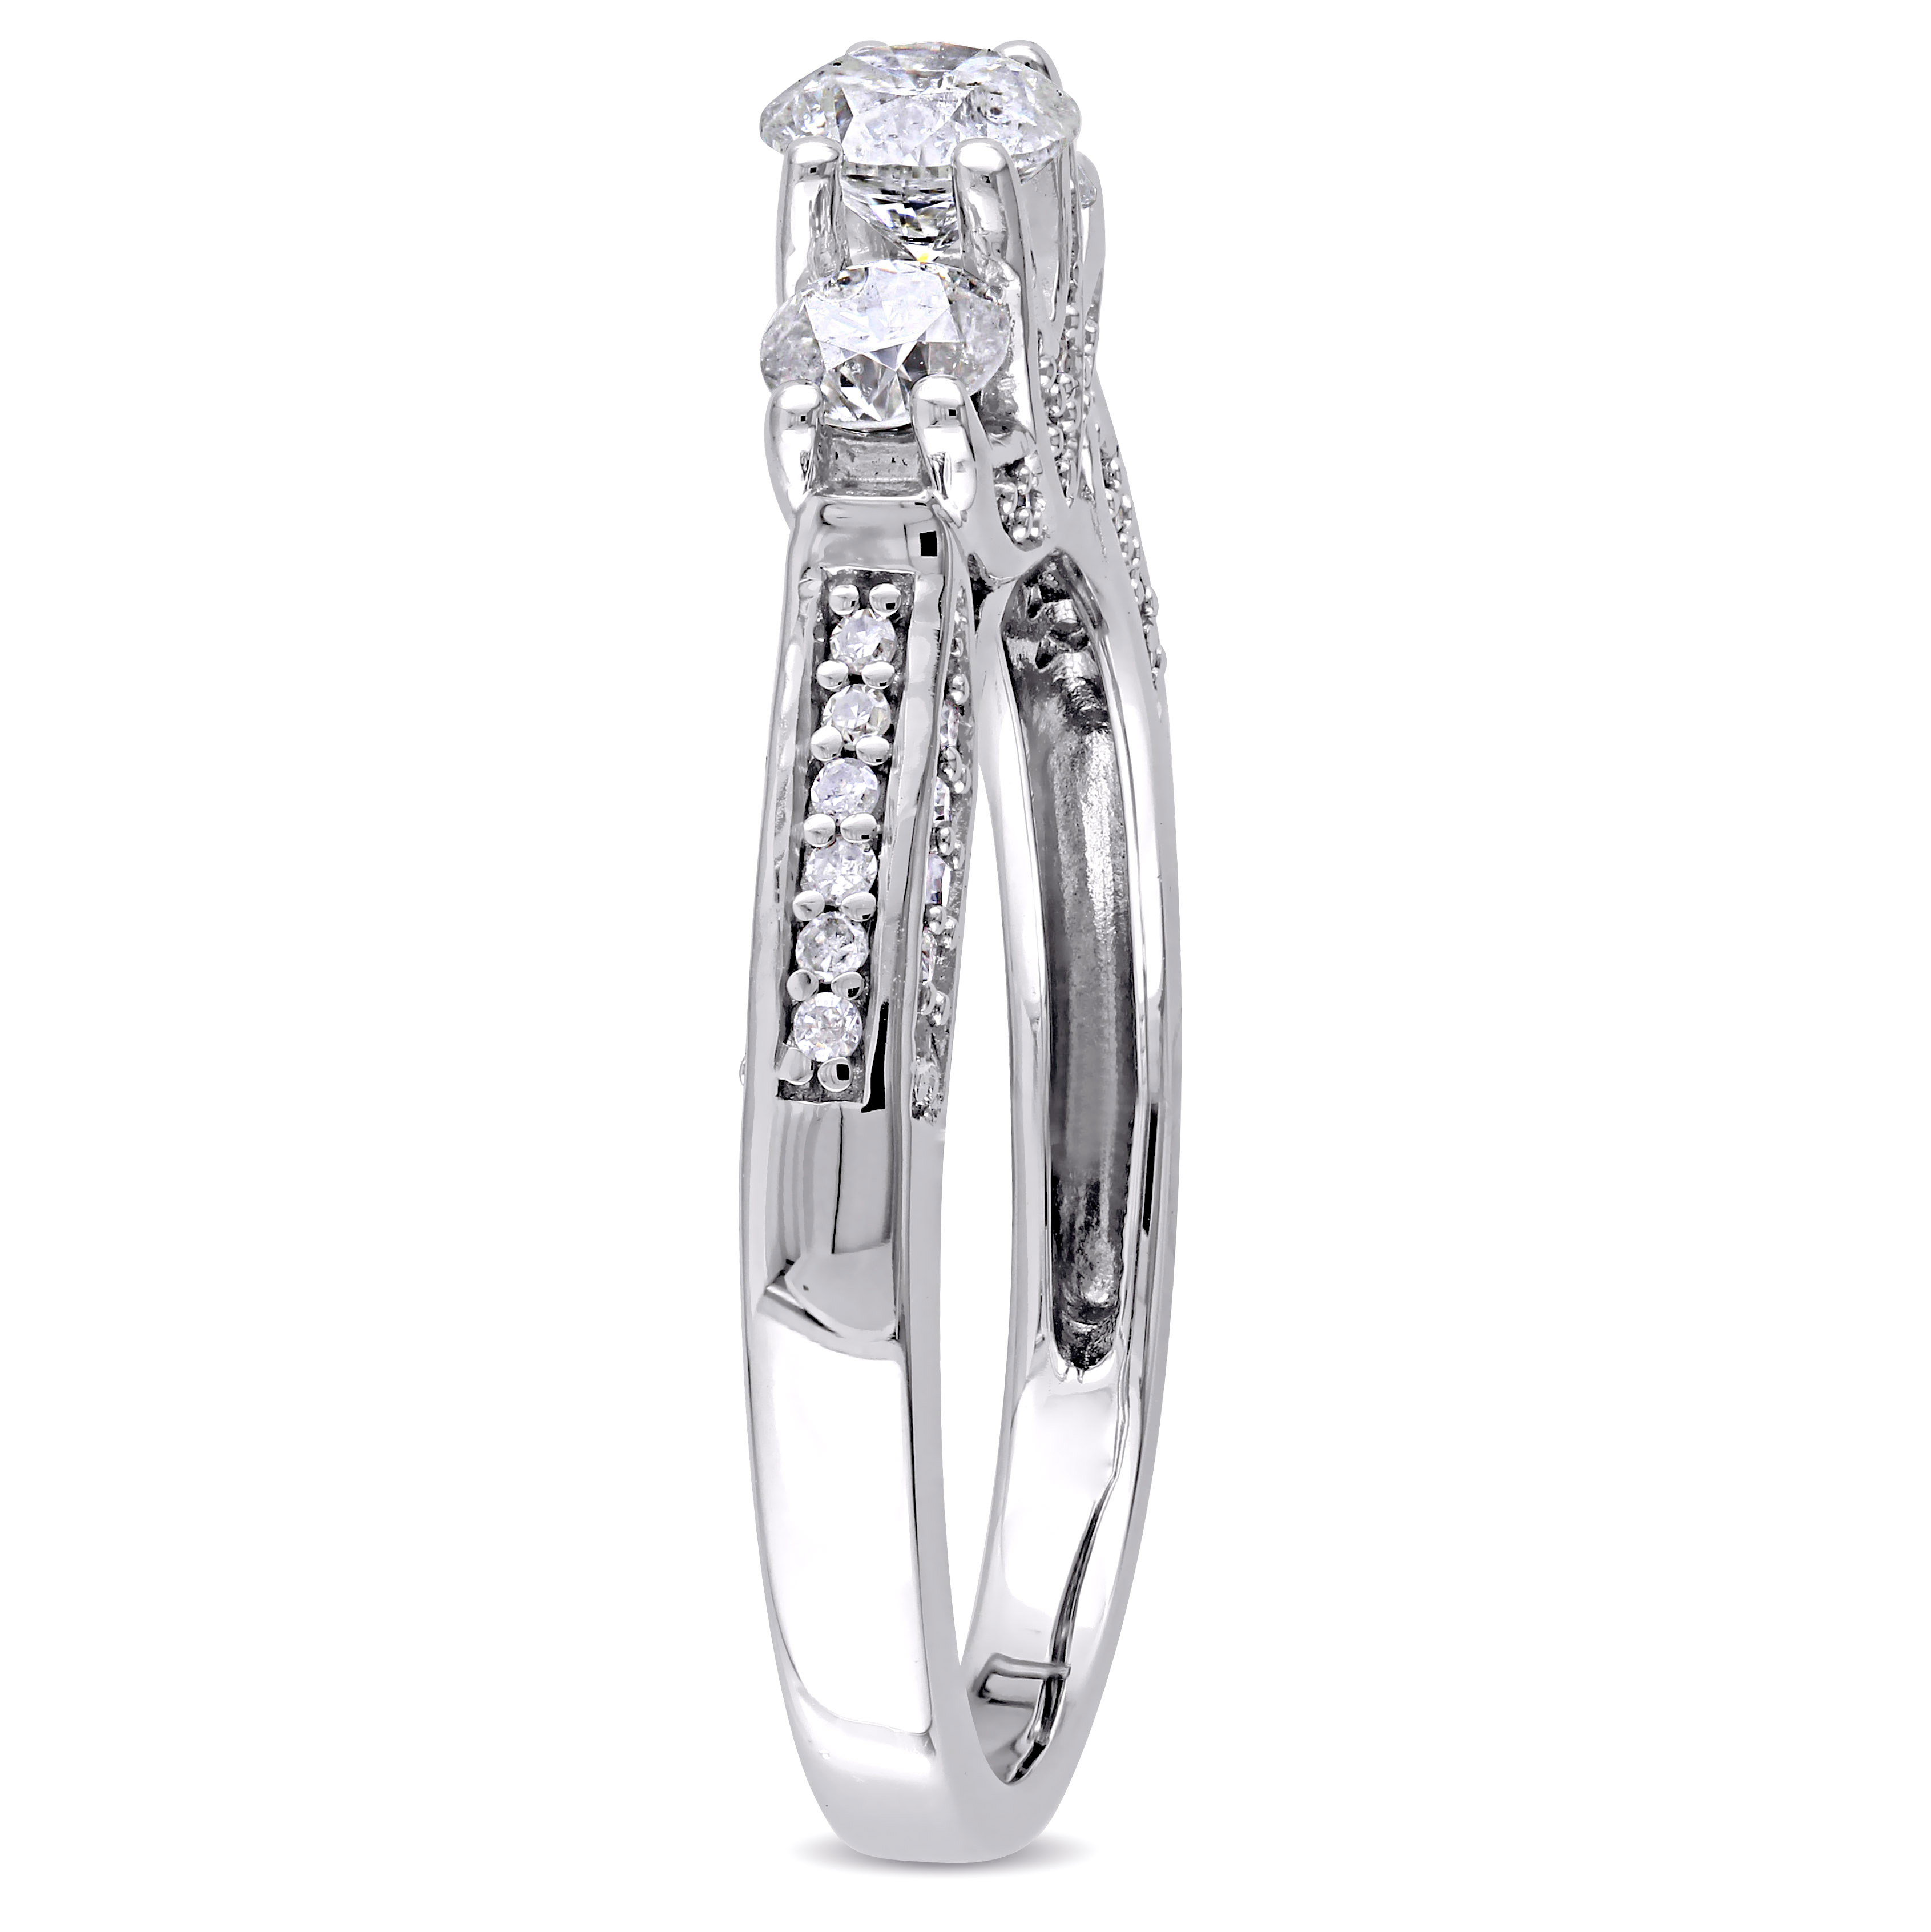 1 CT TW Diamond 3-Stone Beaded Engagement Ring in 14k White Gold